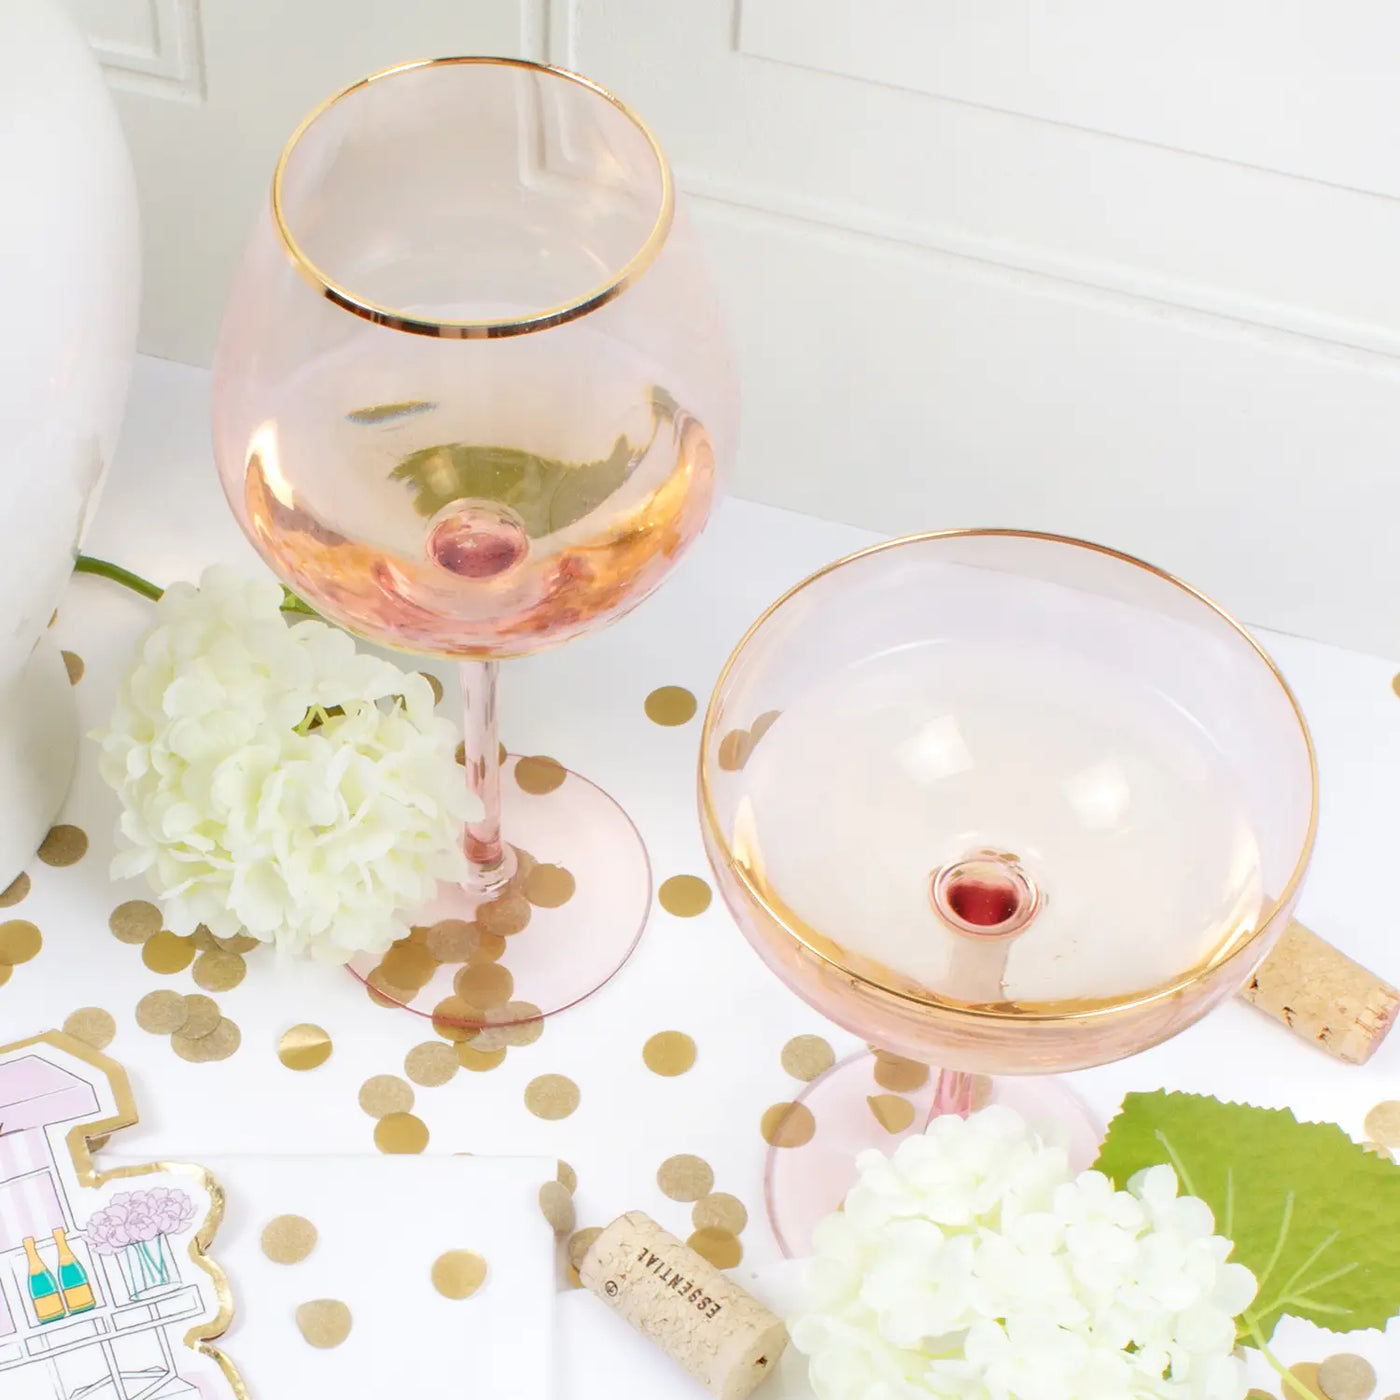 Light Pink Wine Glass